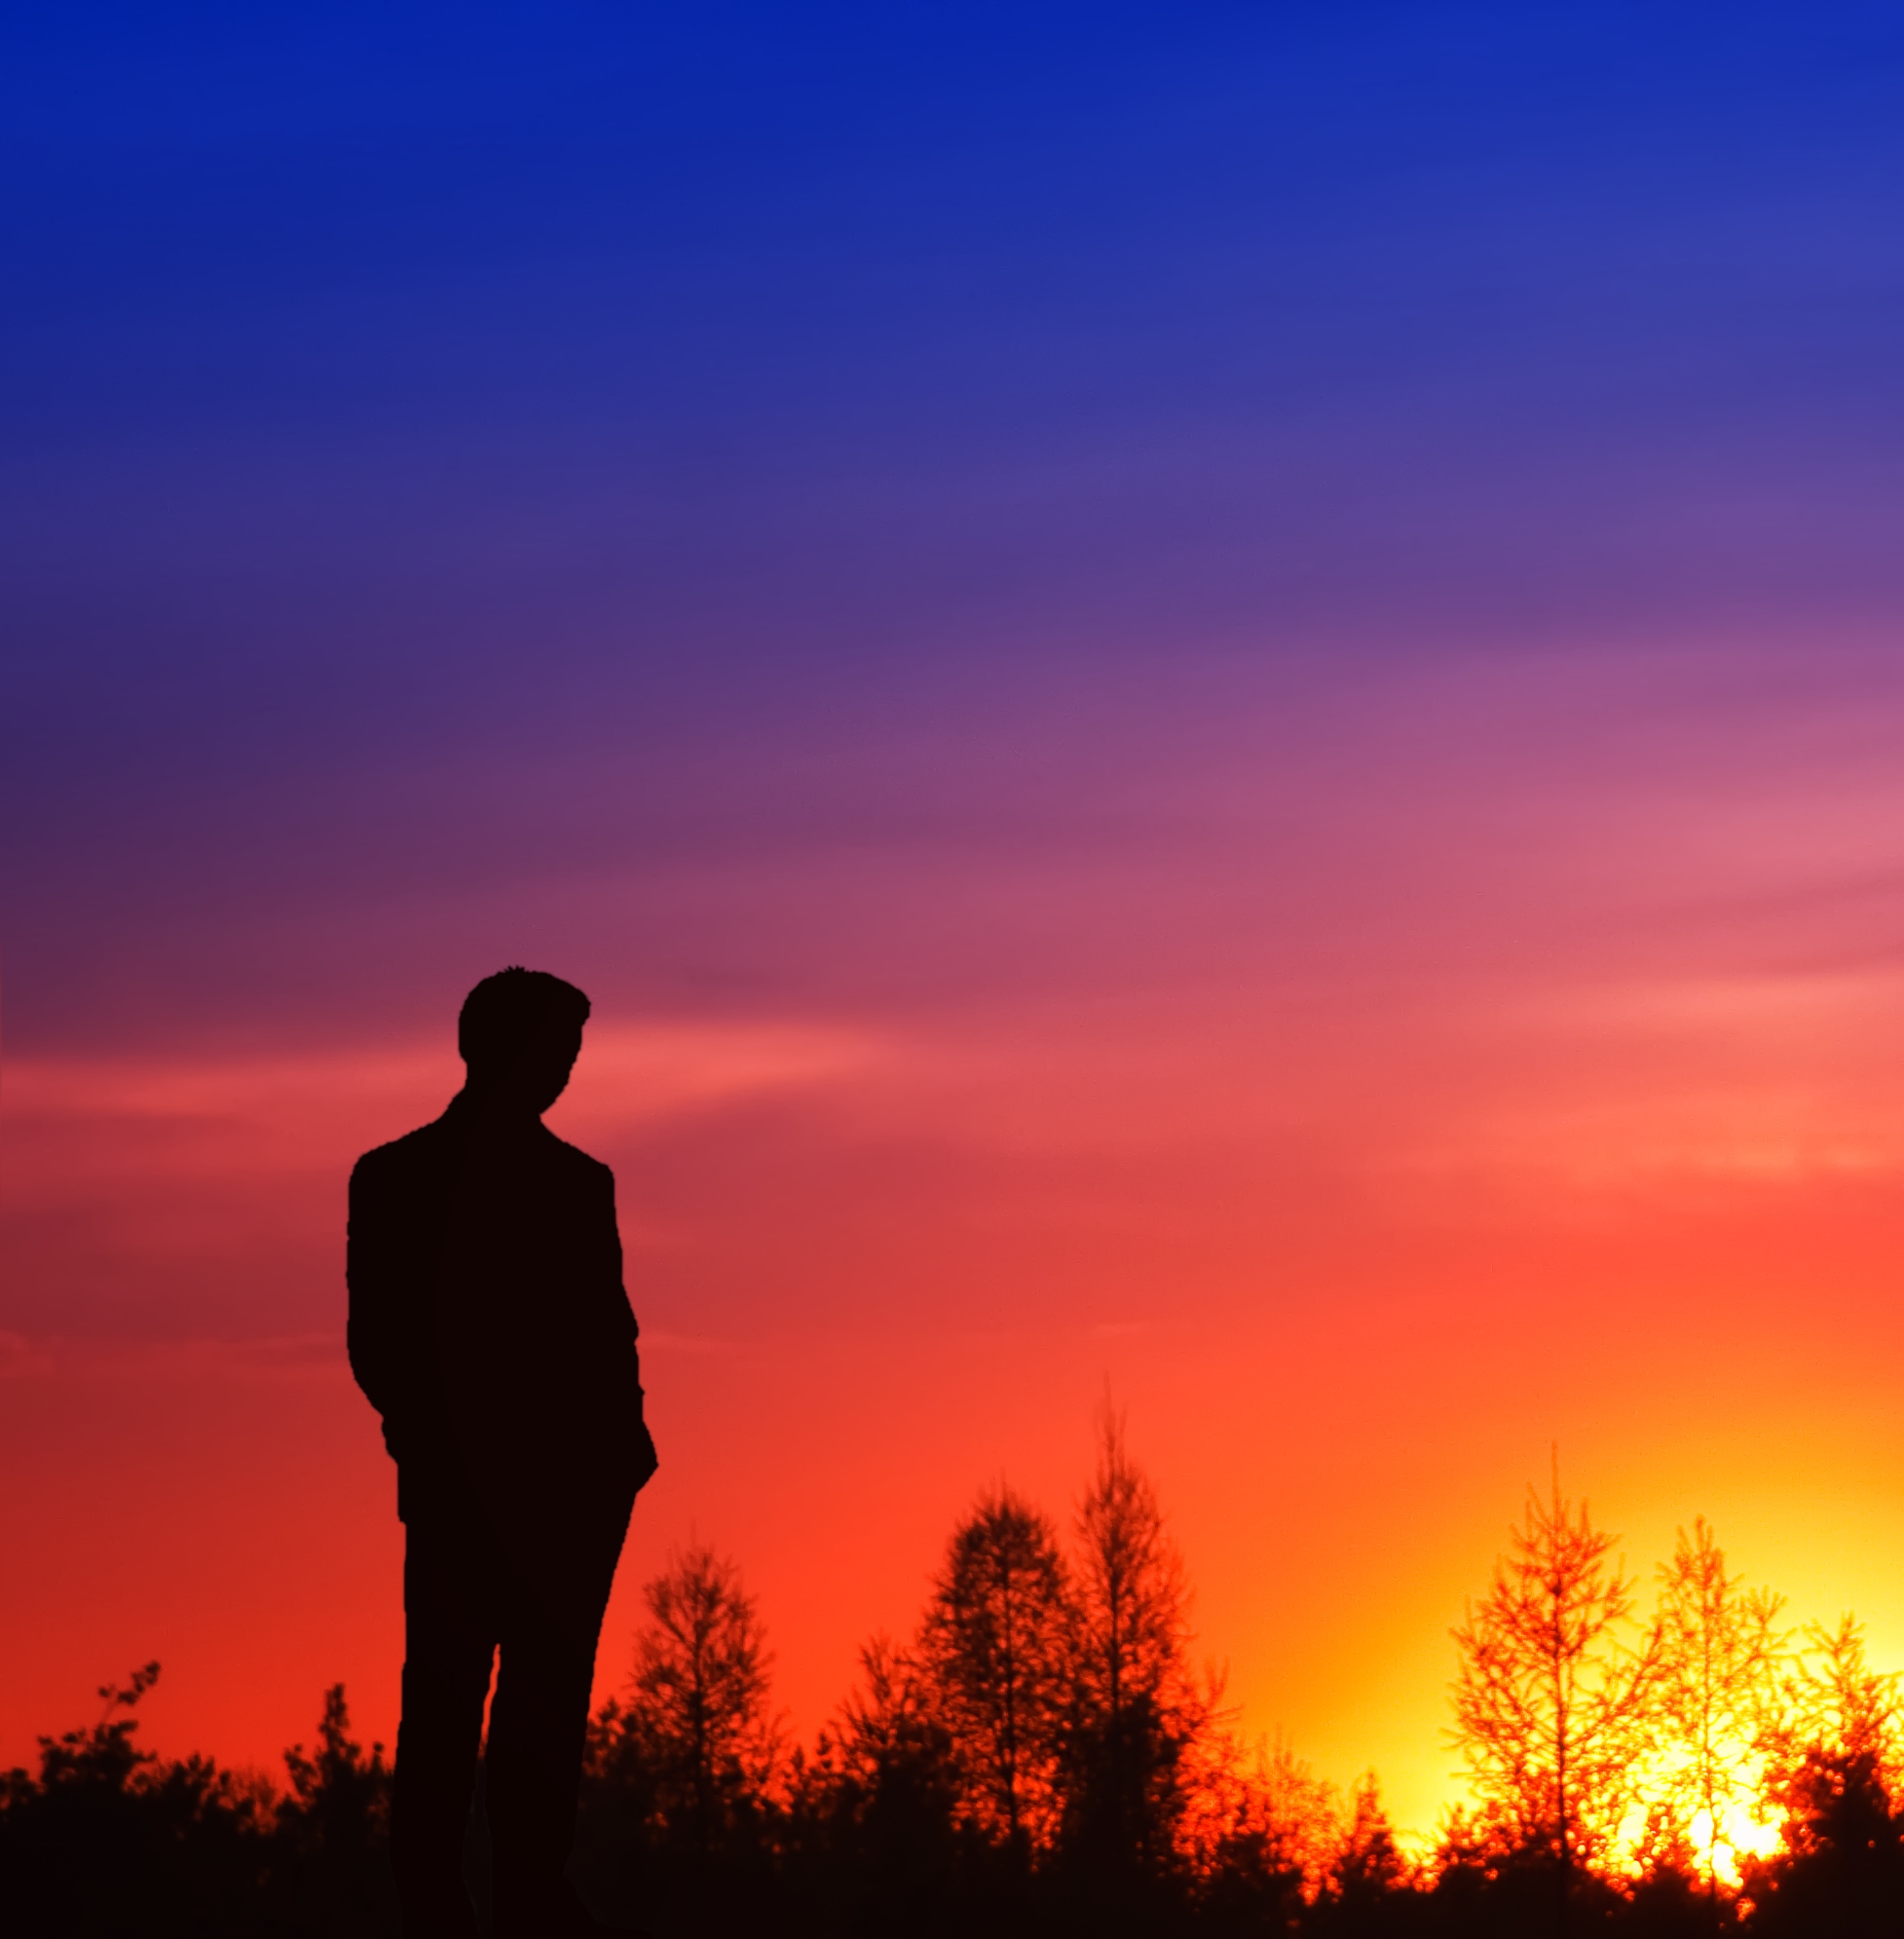 [Image: man-alone-at-sunset.jpg]